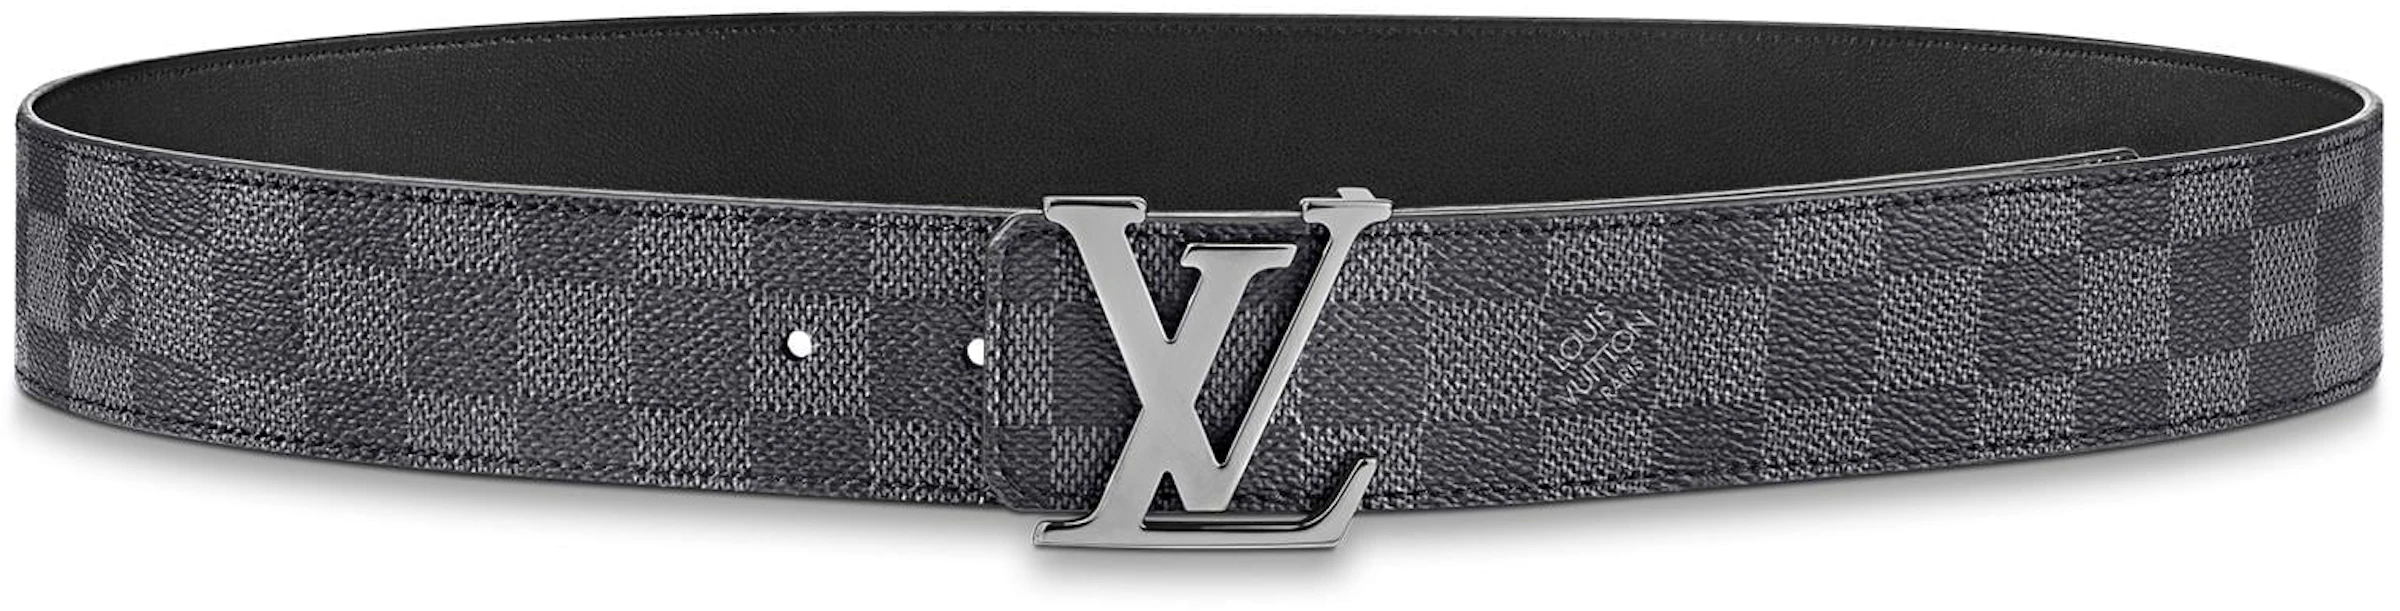 Louis Vuitton Lv Iconic 20Mm Reversible Belt (M0528X, M0528W, M0528V)